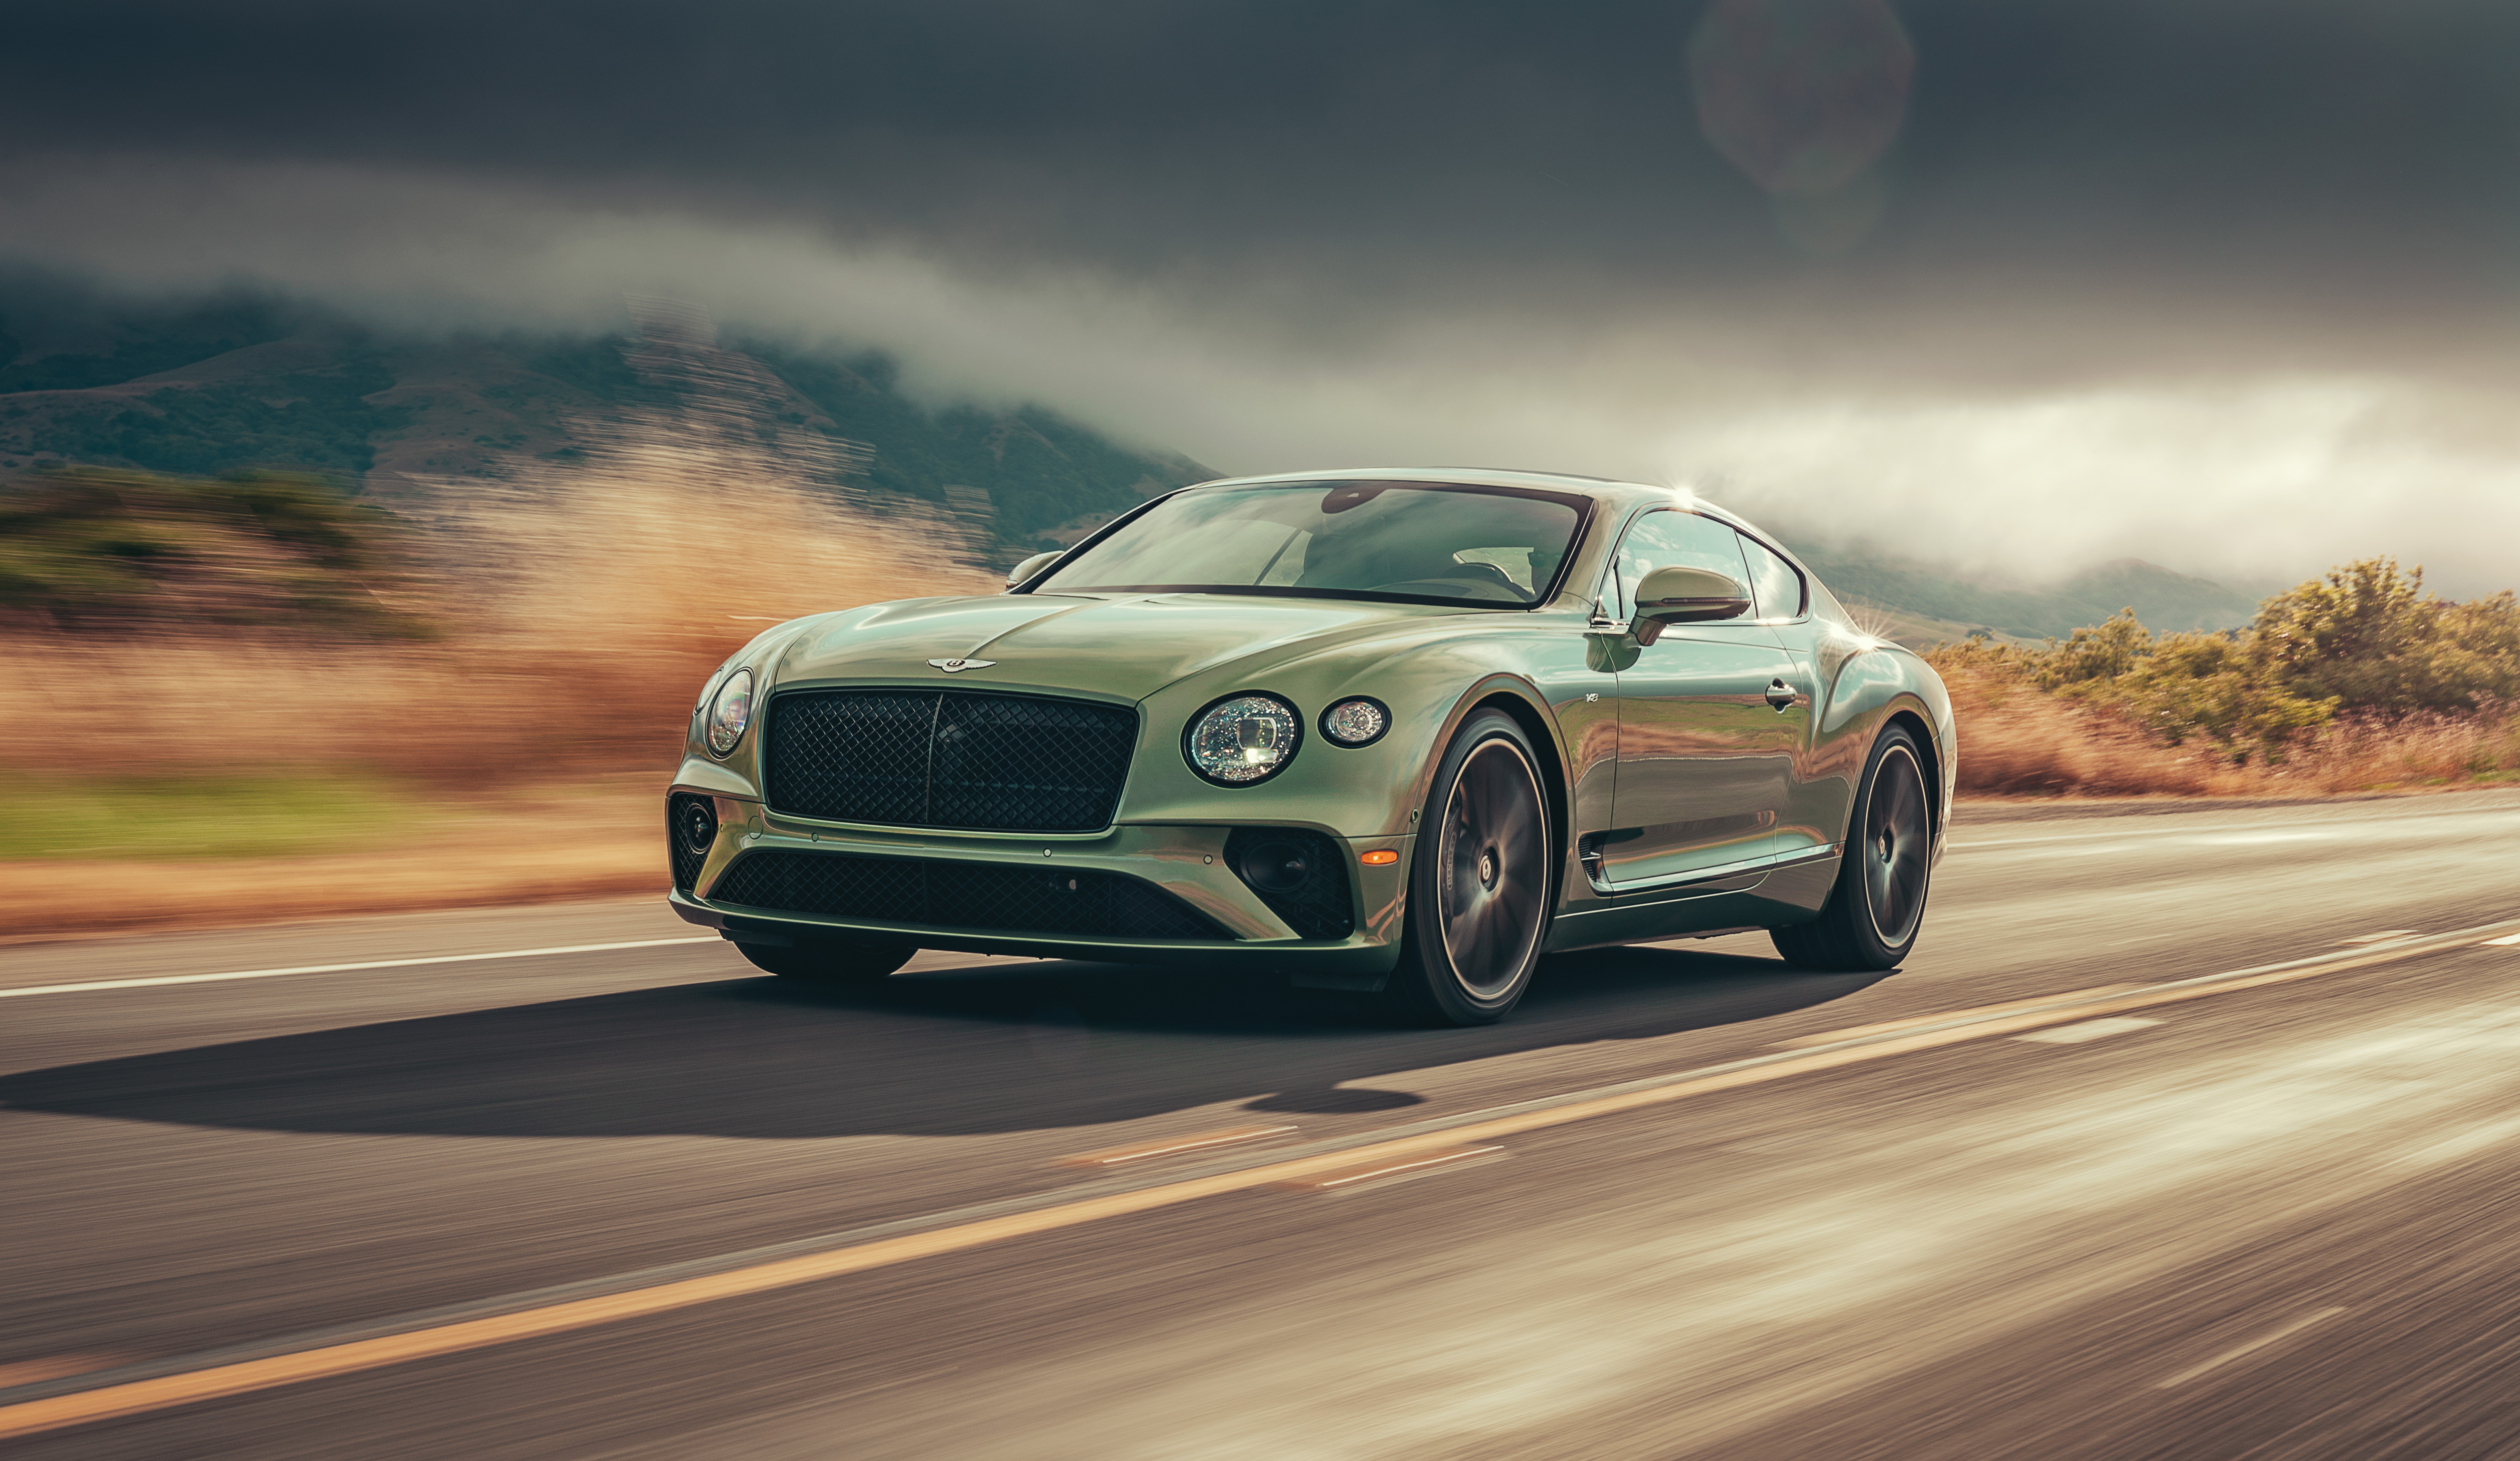 Baixe gratuitamente a imagem Bentley, Carro, Bentley Continental Gt, Veículos, Carro Verde, Bentley Continental na área de trabalho do seu PC